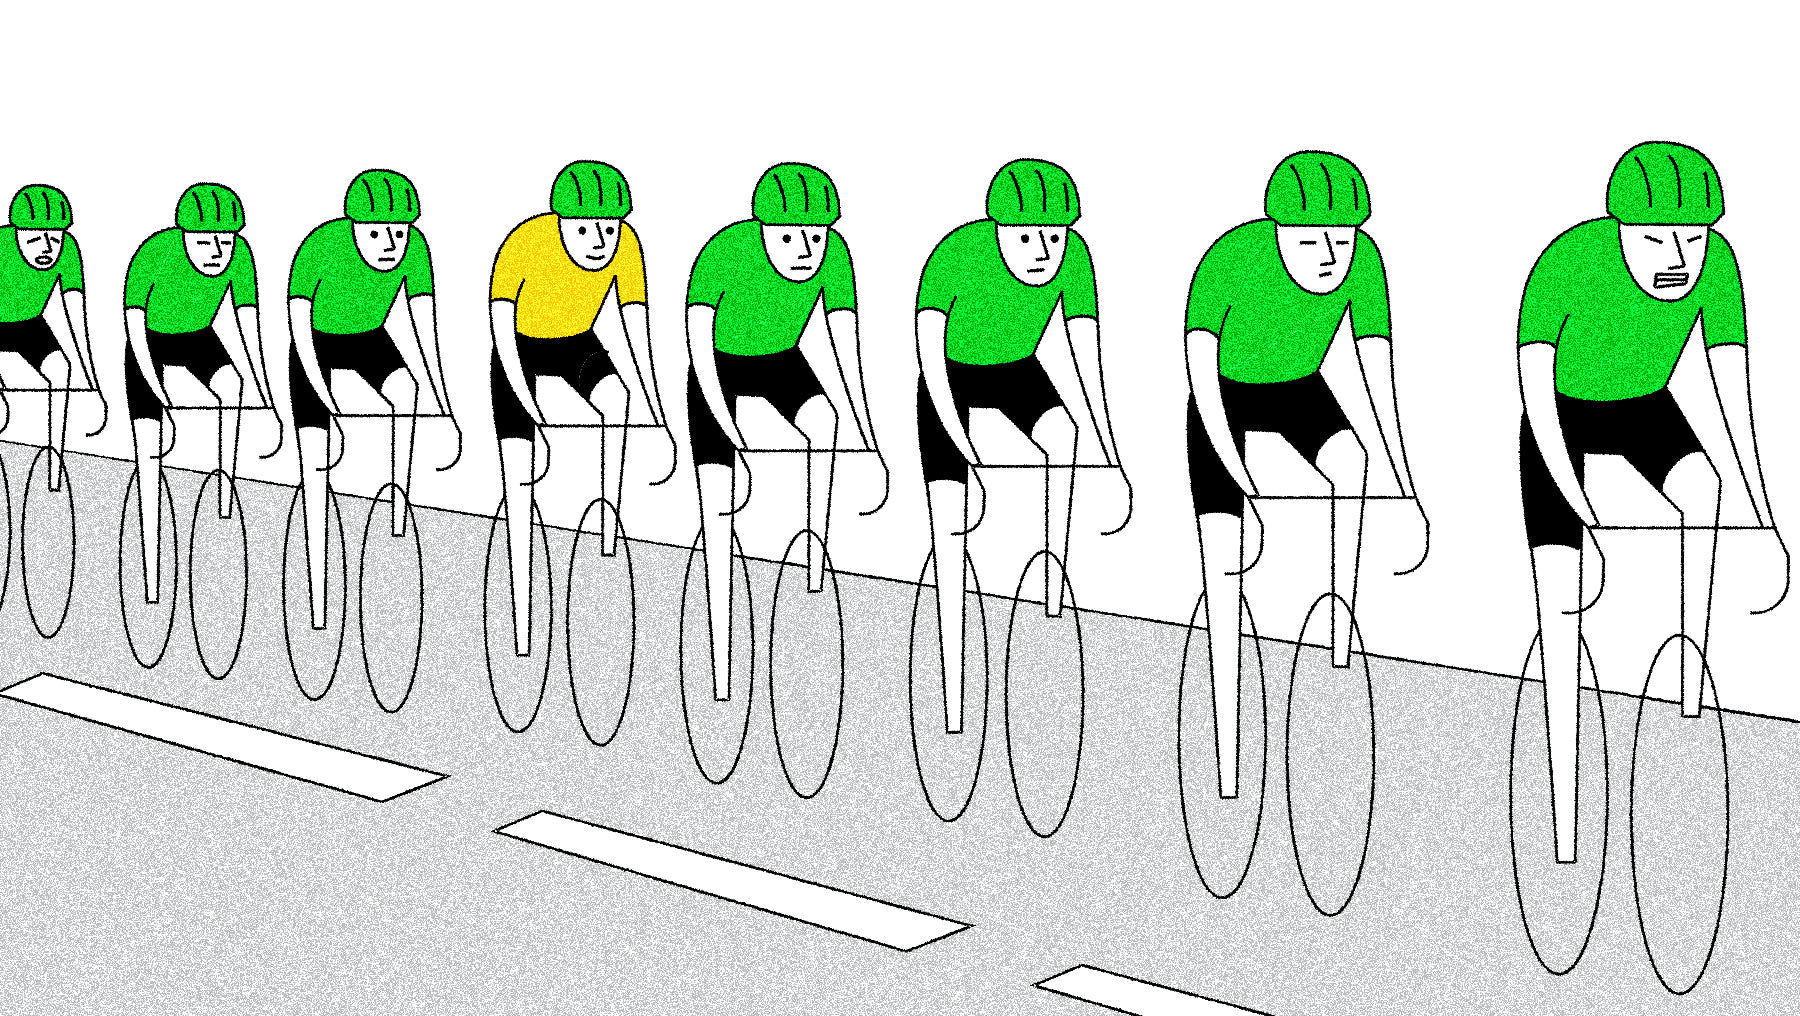 Teamwork in the Tour de France